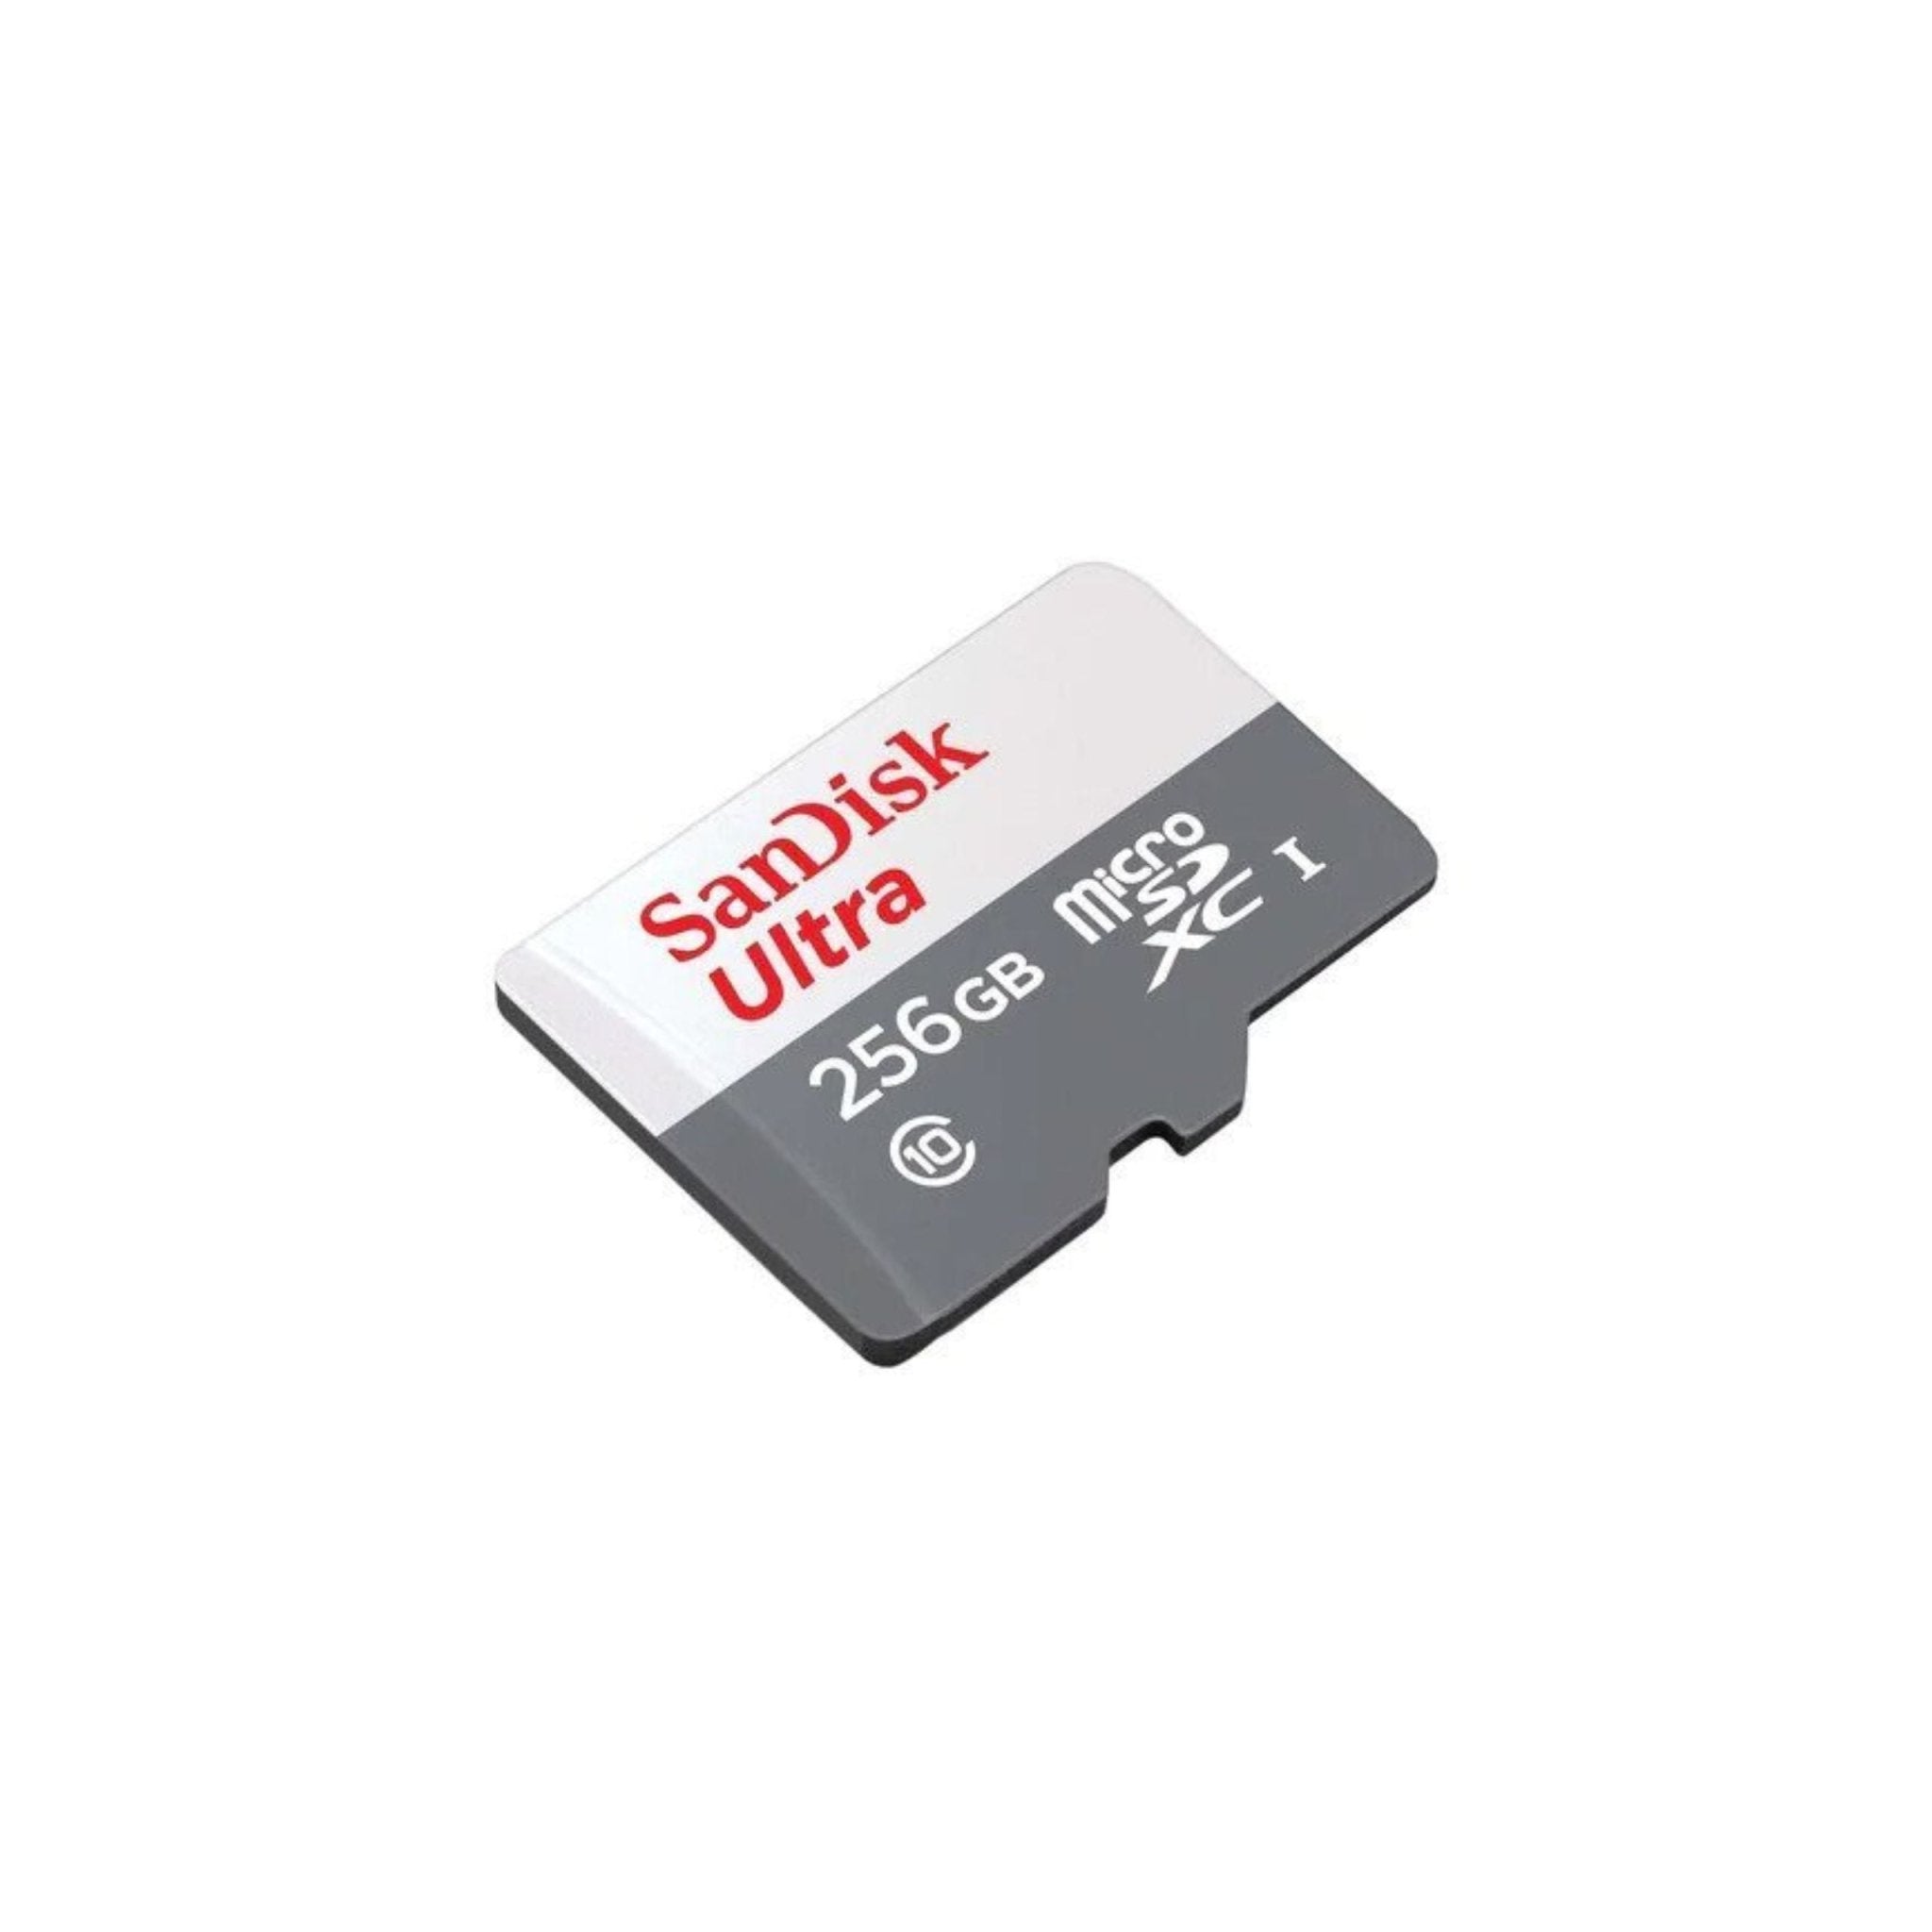 SanDisk Ultra microSDXC UHS-I Card